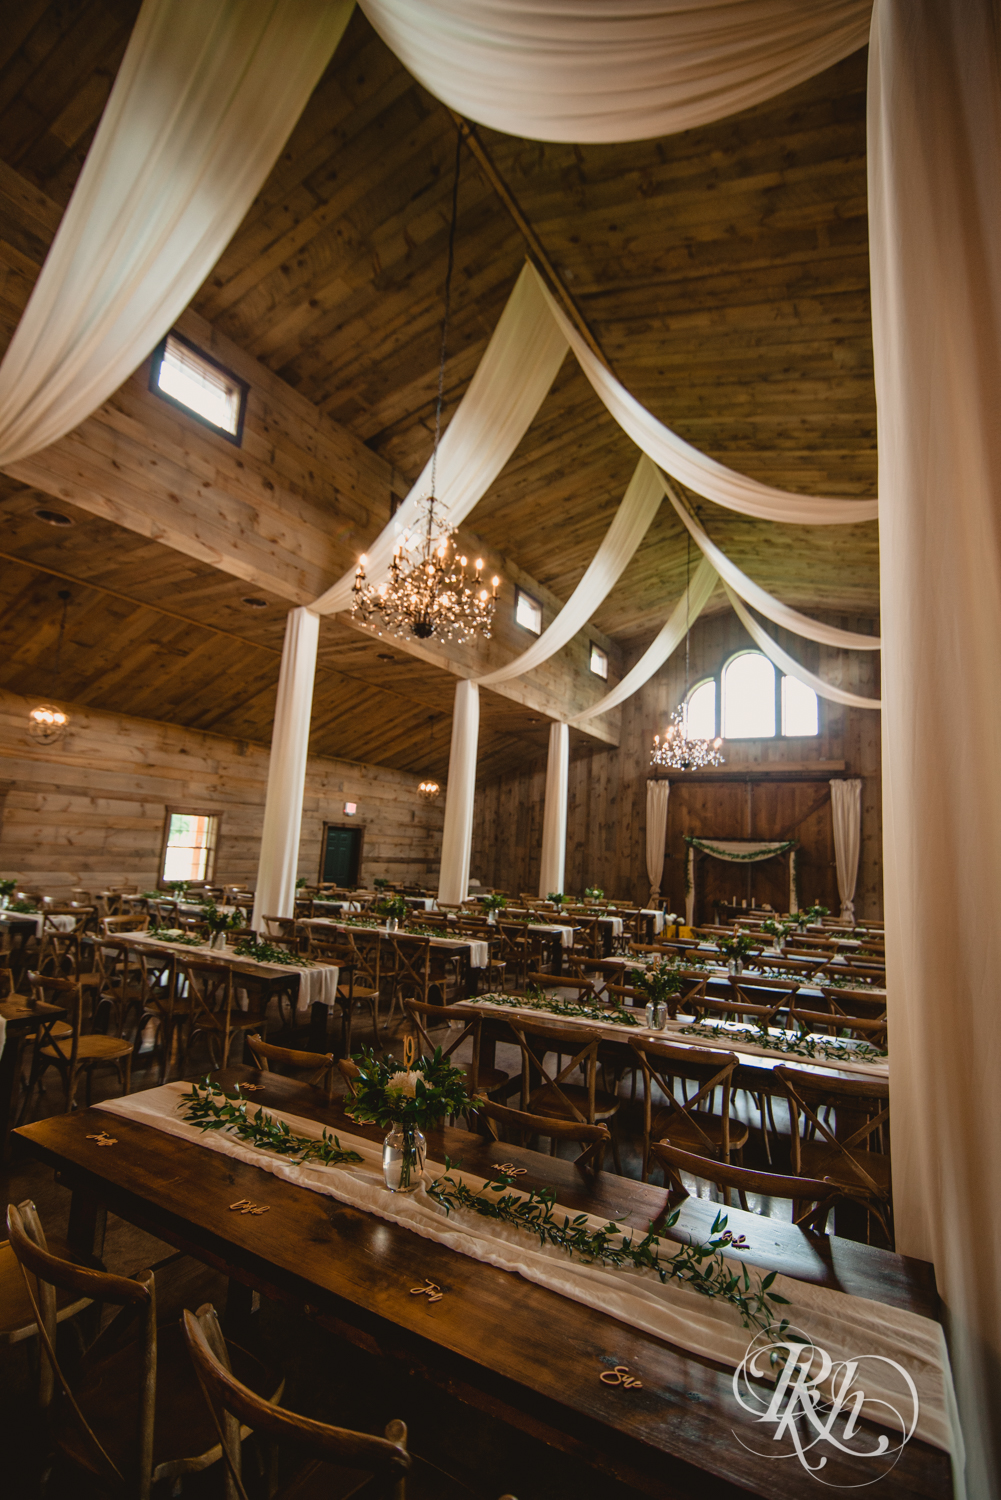 Indoor barn wedding reception setup at Creekside Farm Weddings and Events in Rush City, Minnesota.